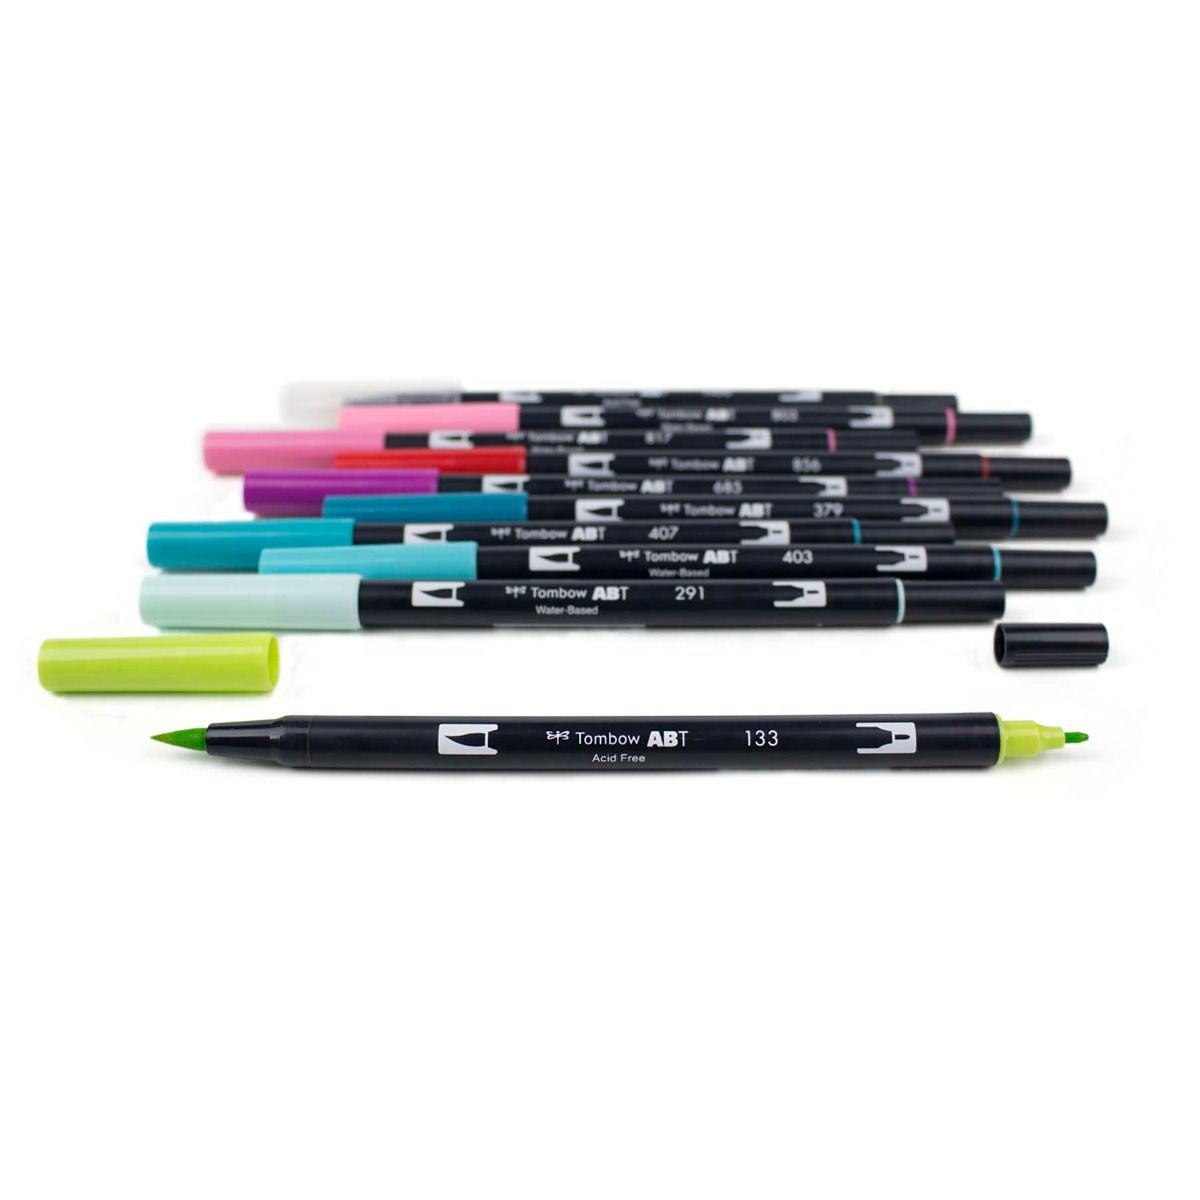 Tombow 10ct Dual Brush Pen Art Markers - Tropical